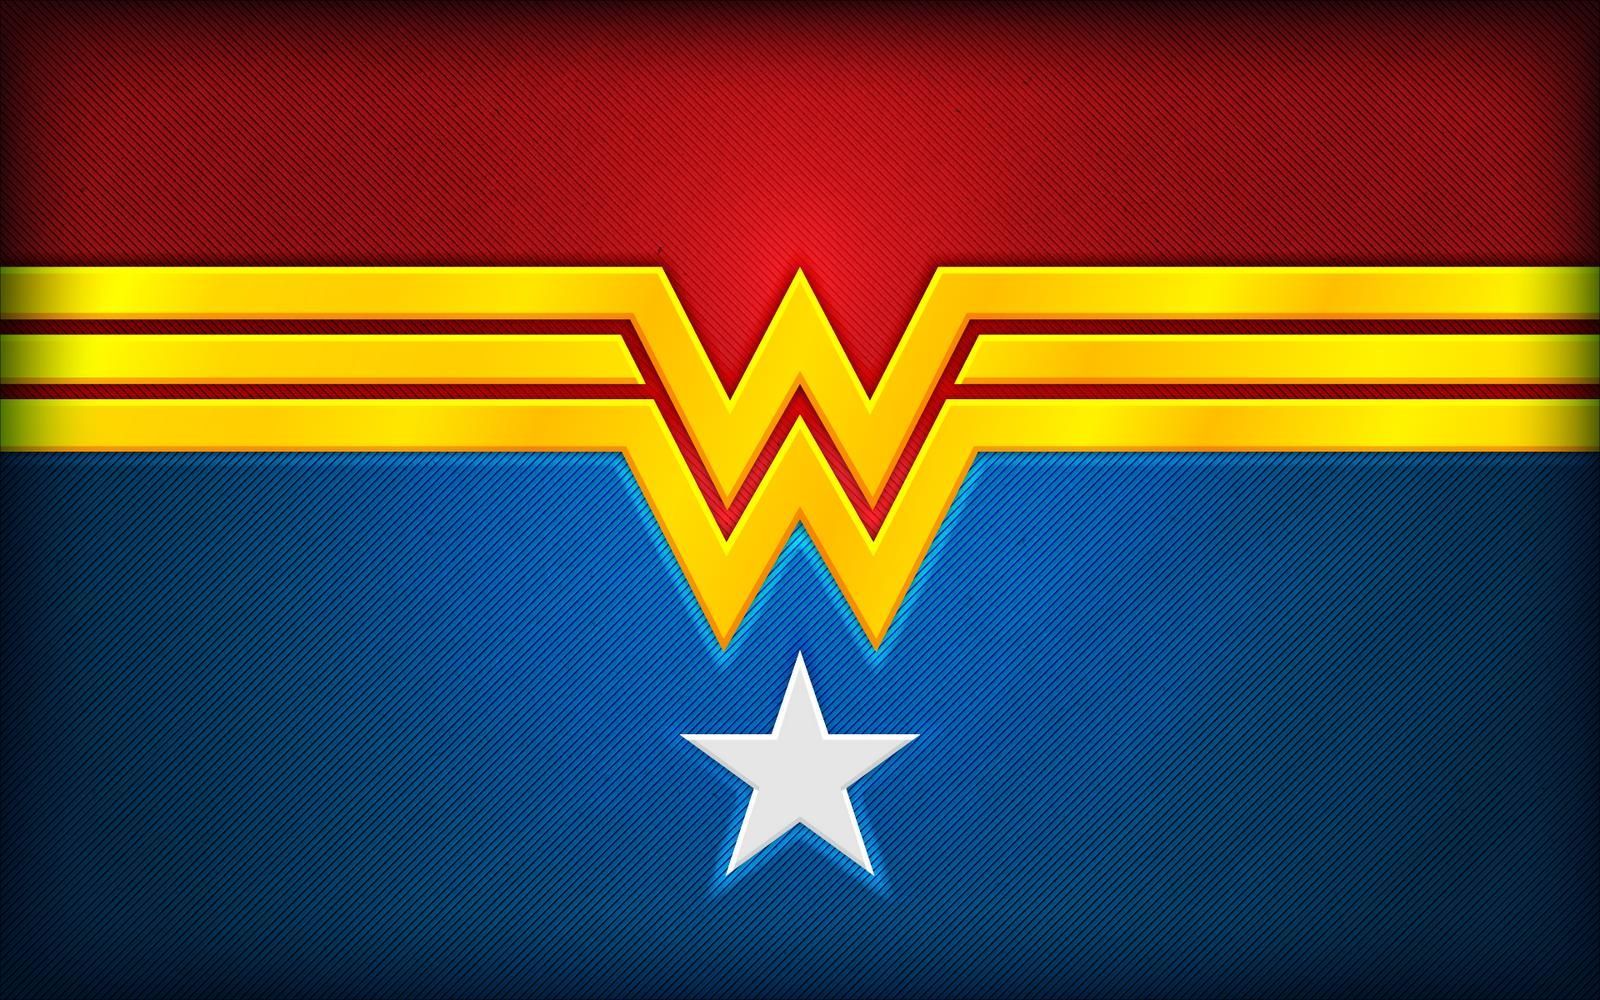 Wonder Woman Logo Wallpaper. Wonder woman fan art, Wonder woman drawing, Wonder woman logo